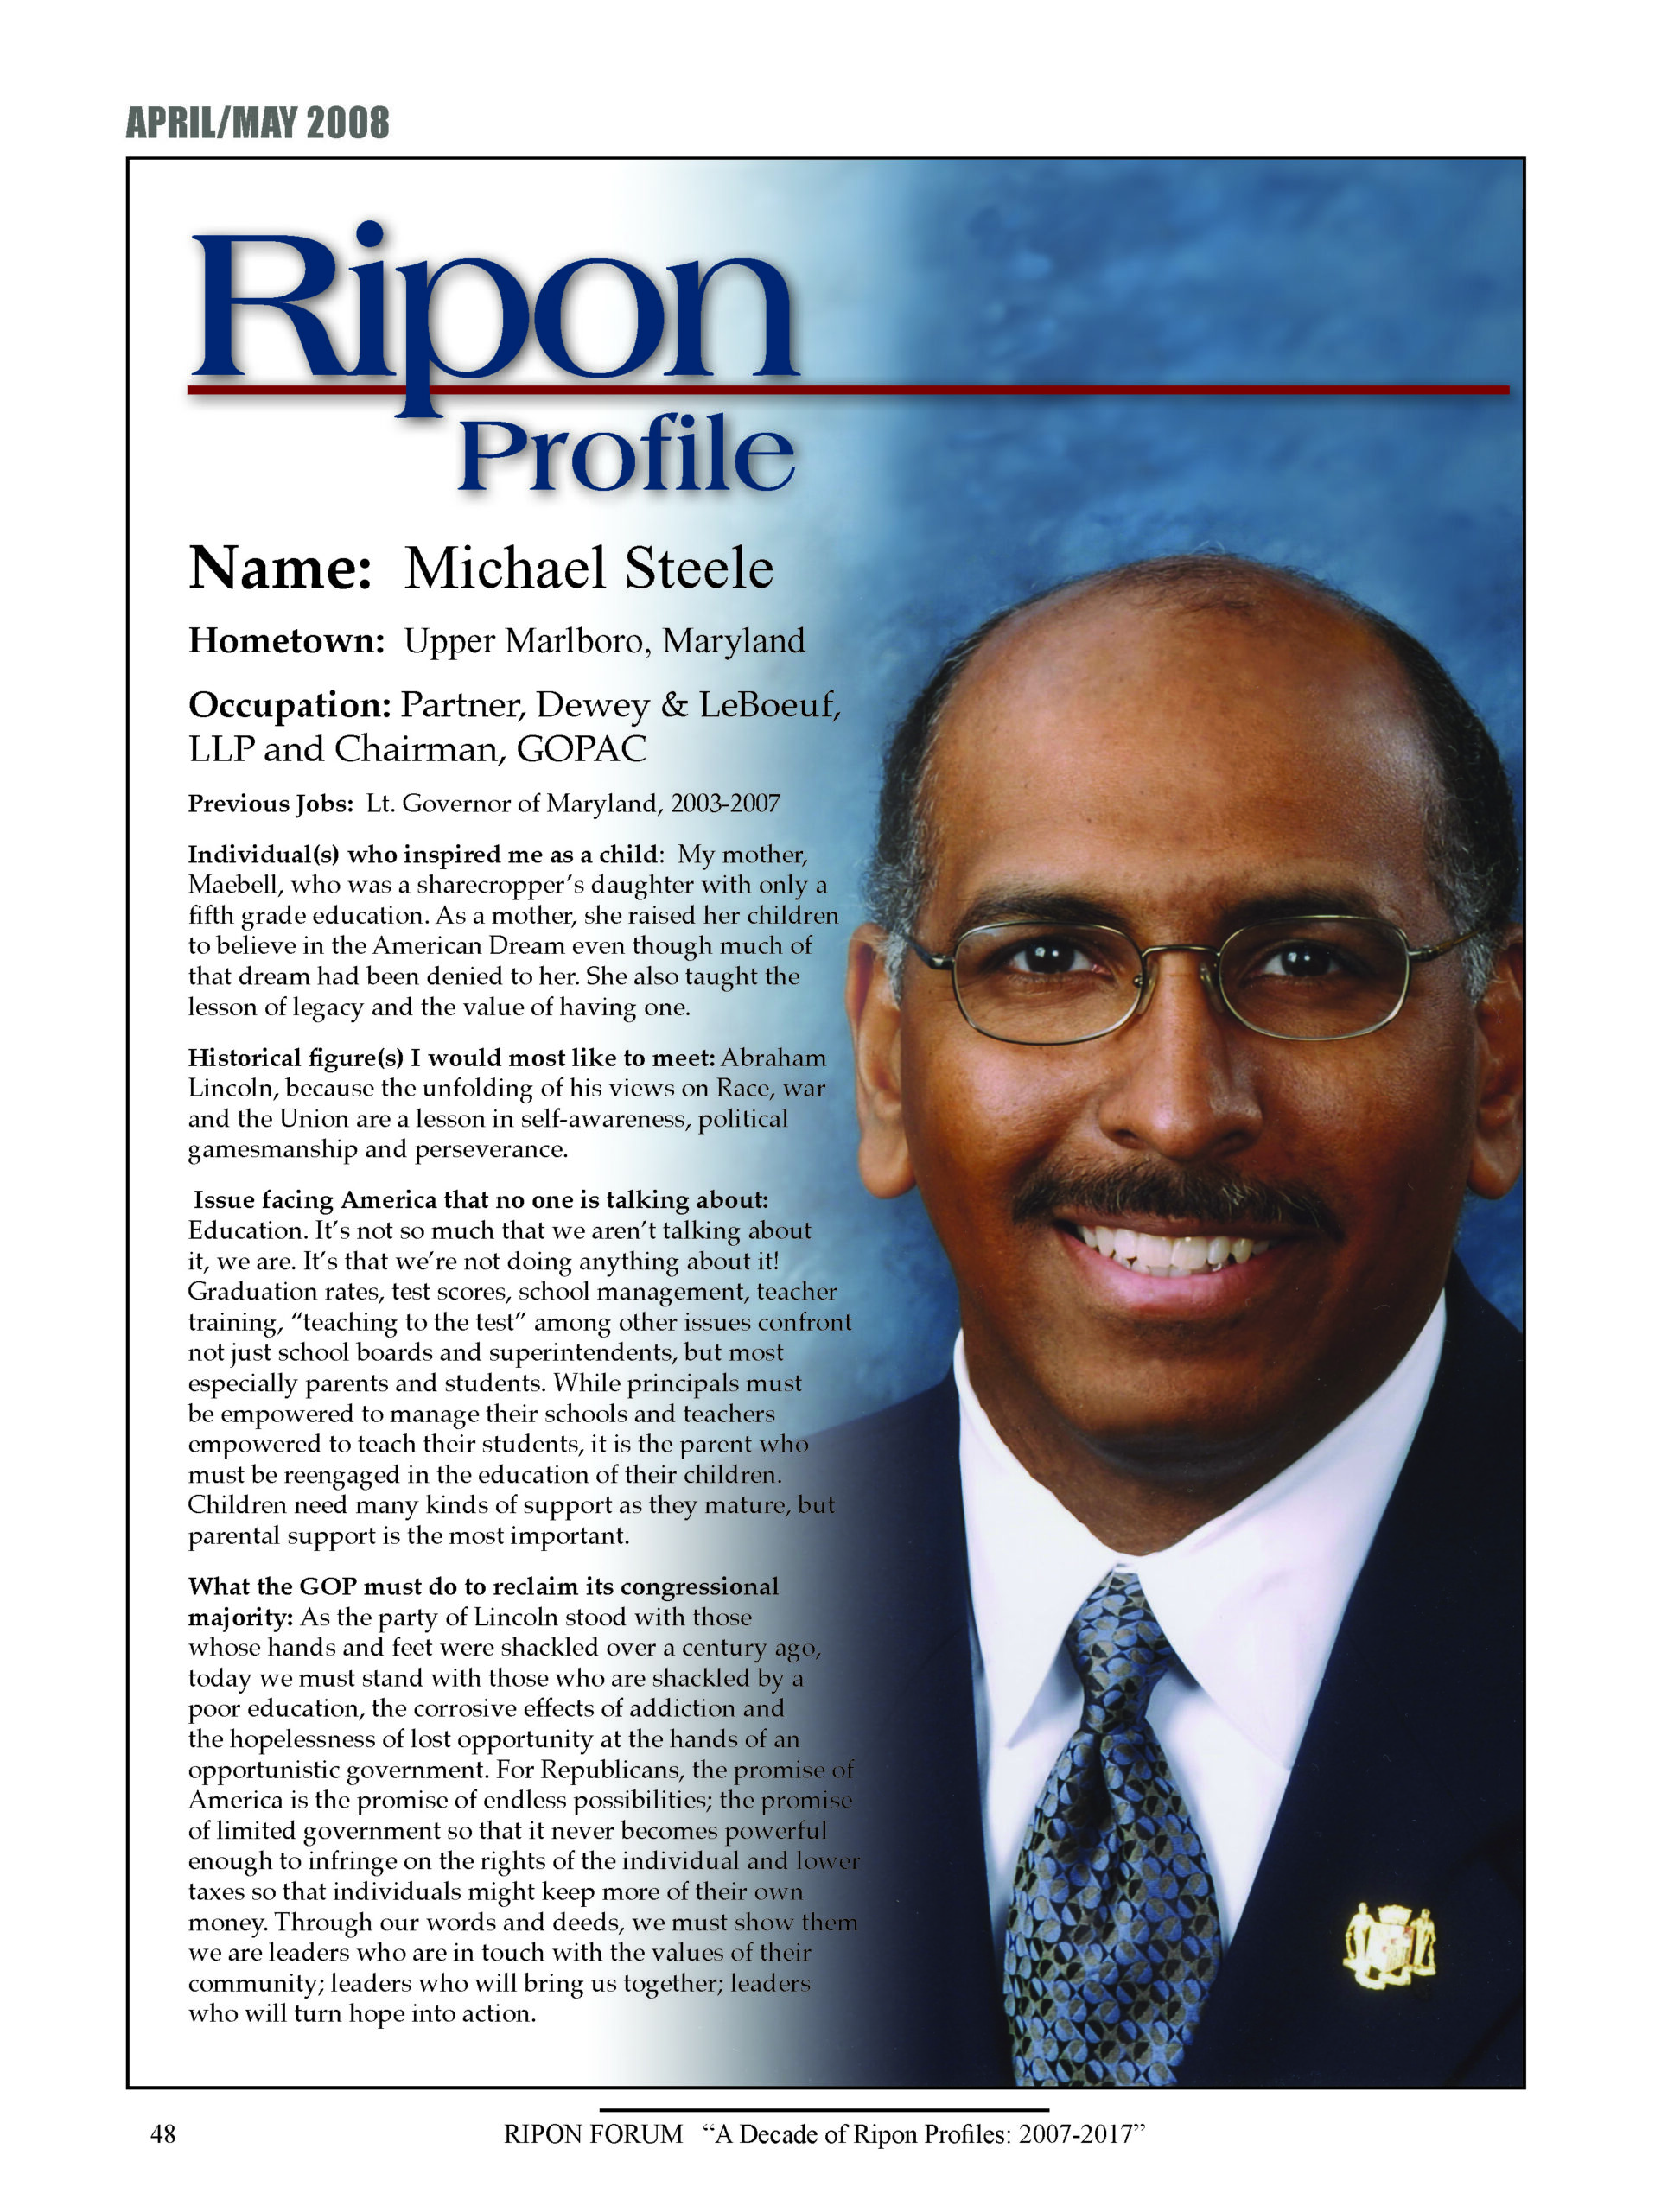 Ripon Profile of Michael Steele